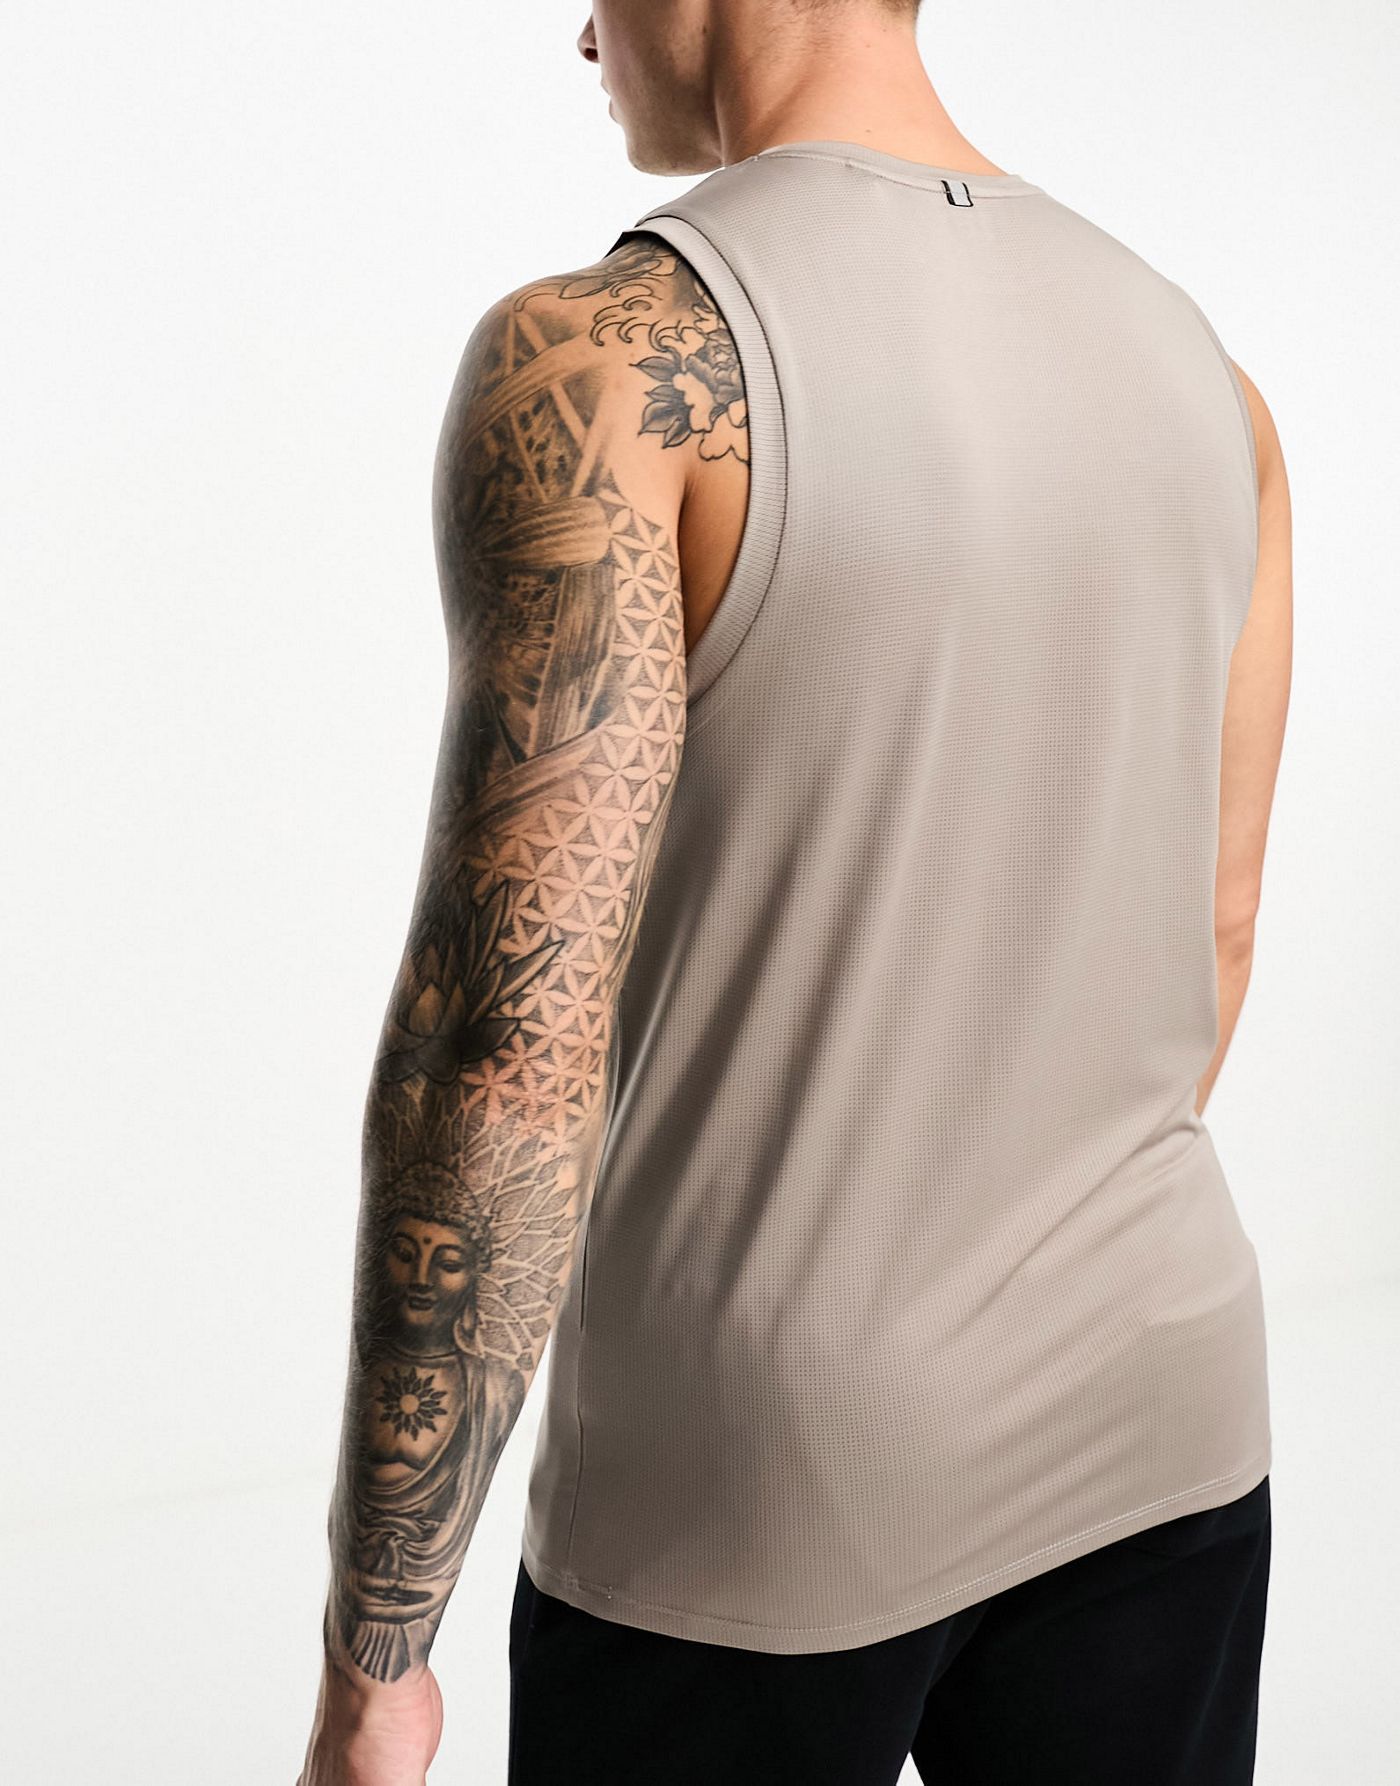 Threadbare Fitness training vest in slate grey